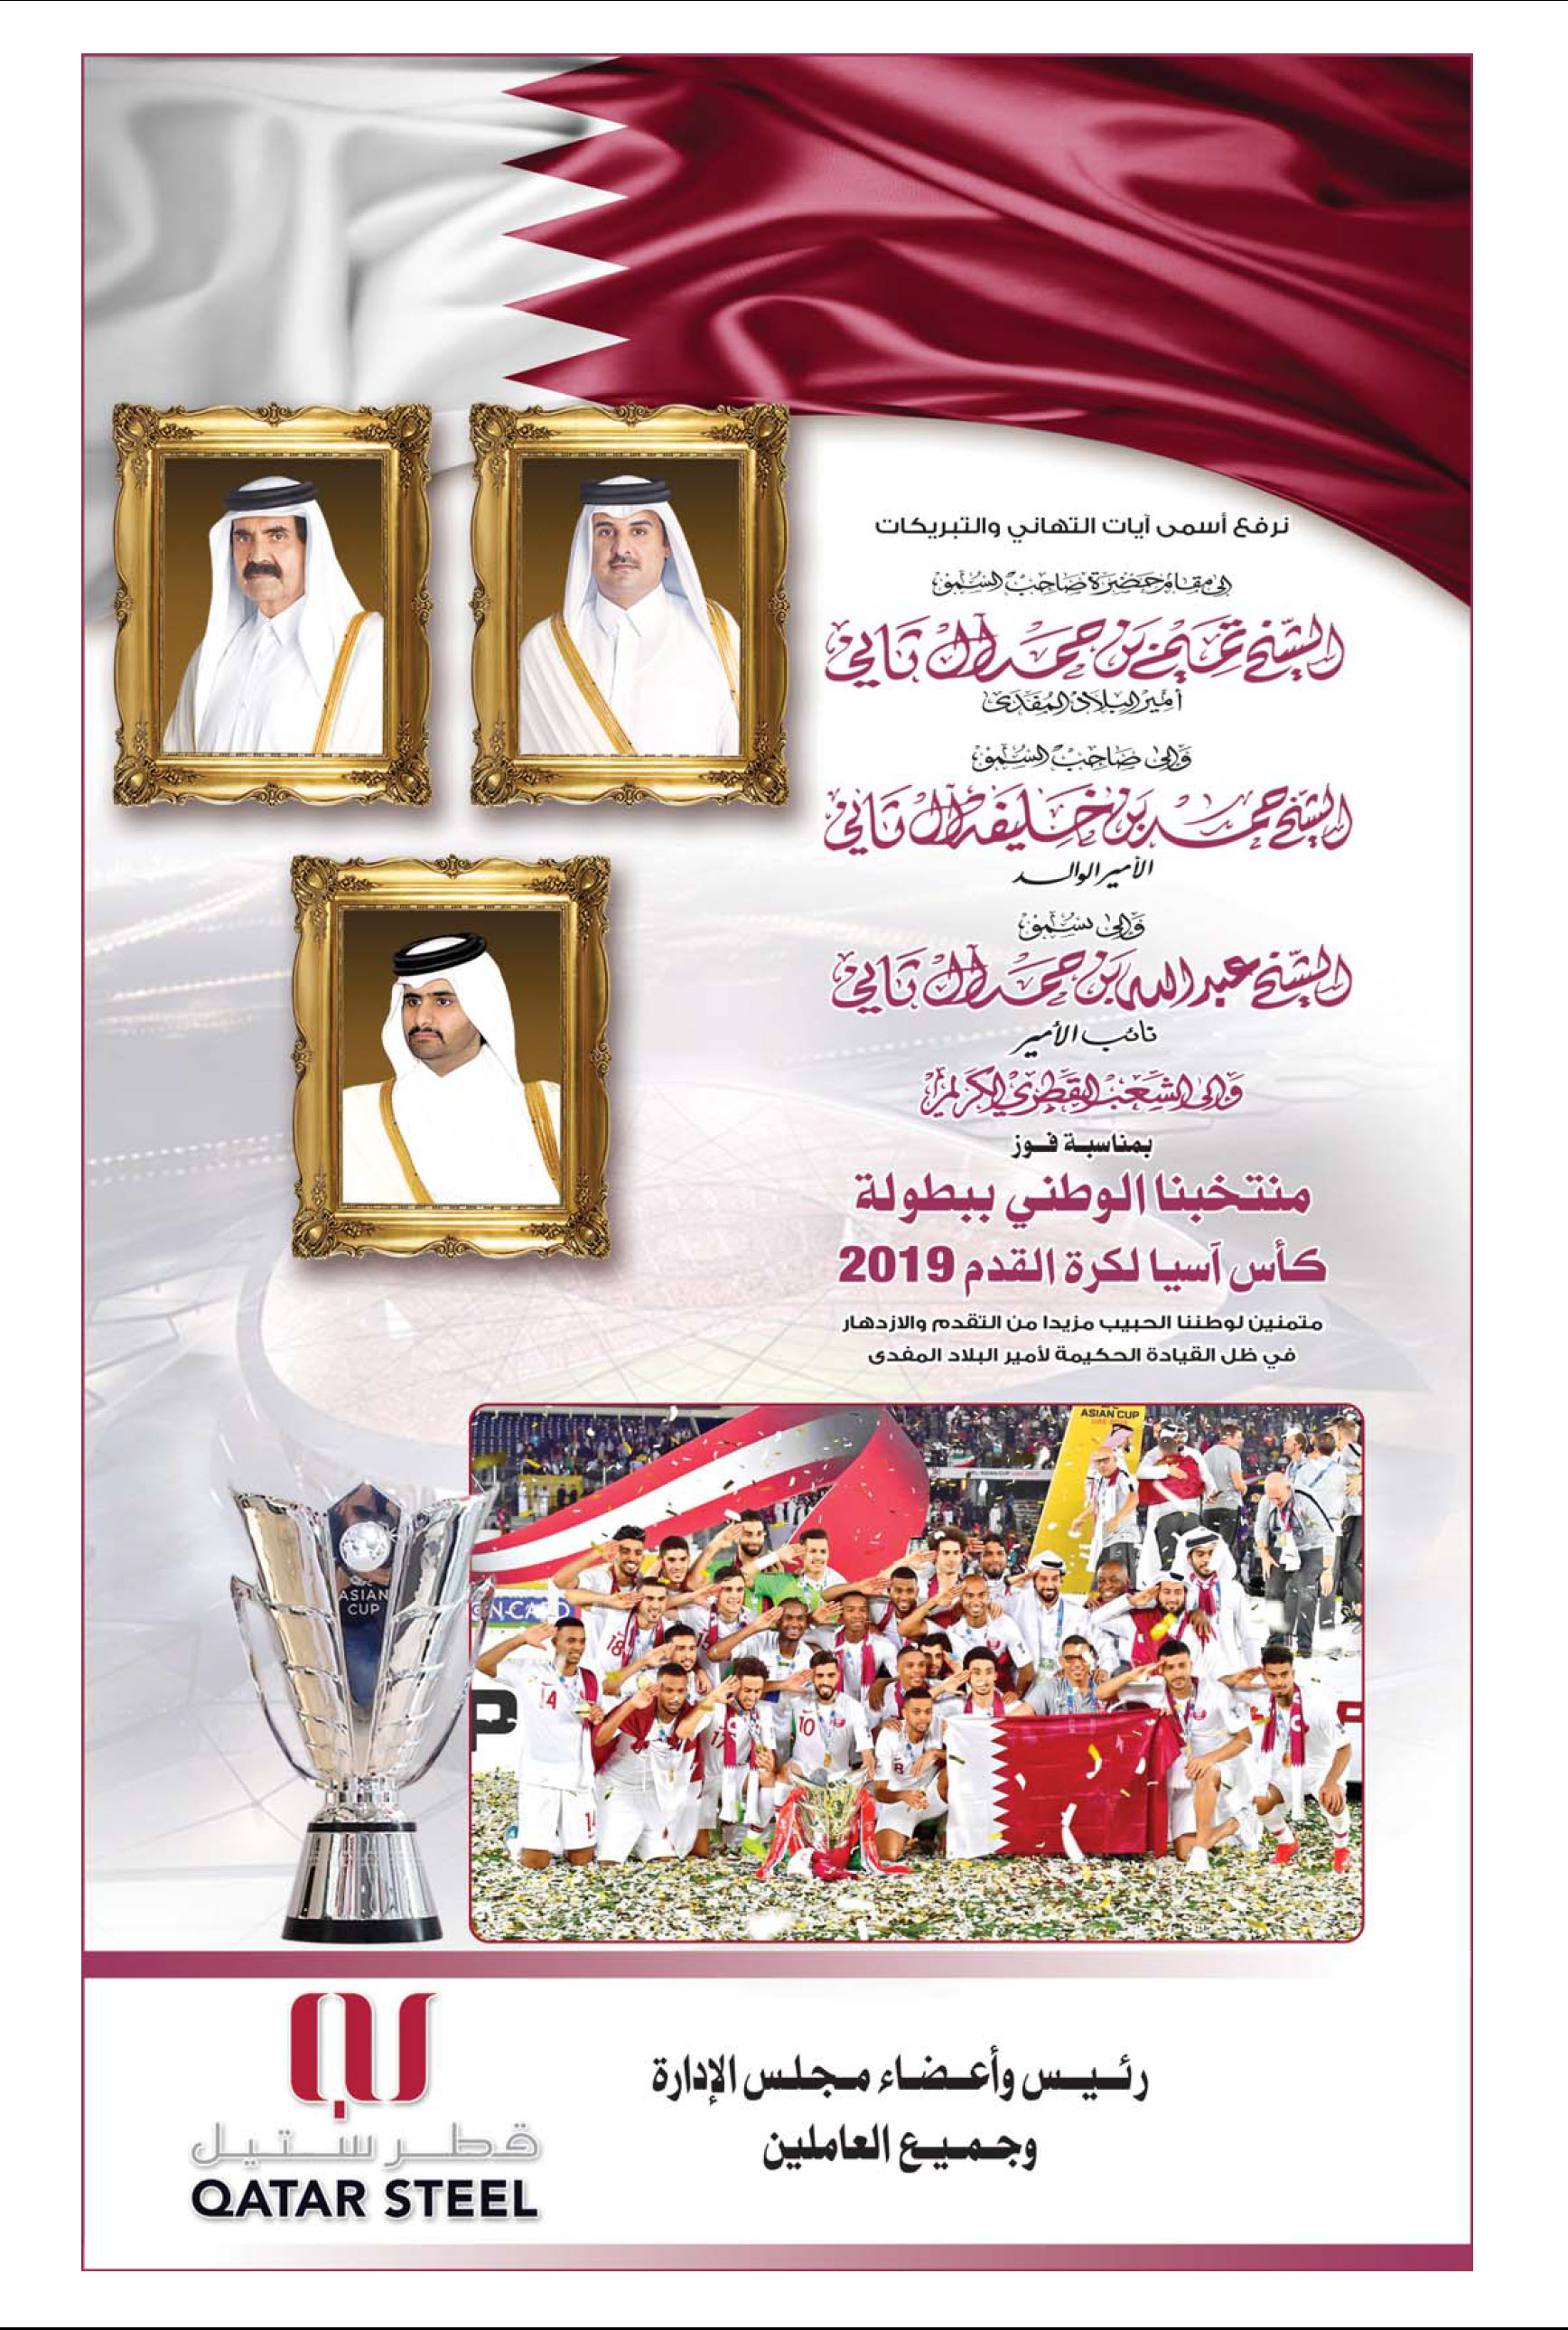 Qatar_Steel_Congratulation_in_Al_Watan_